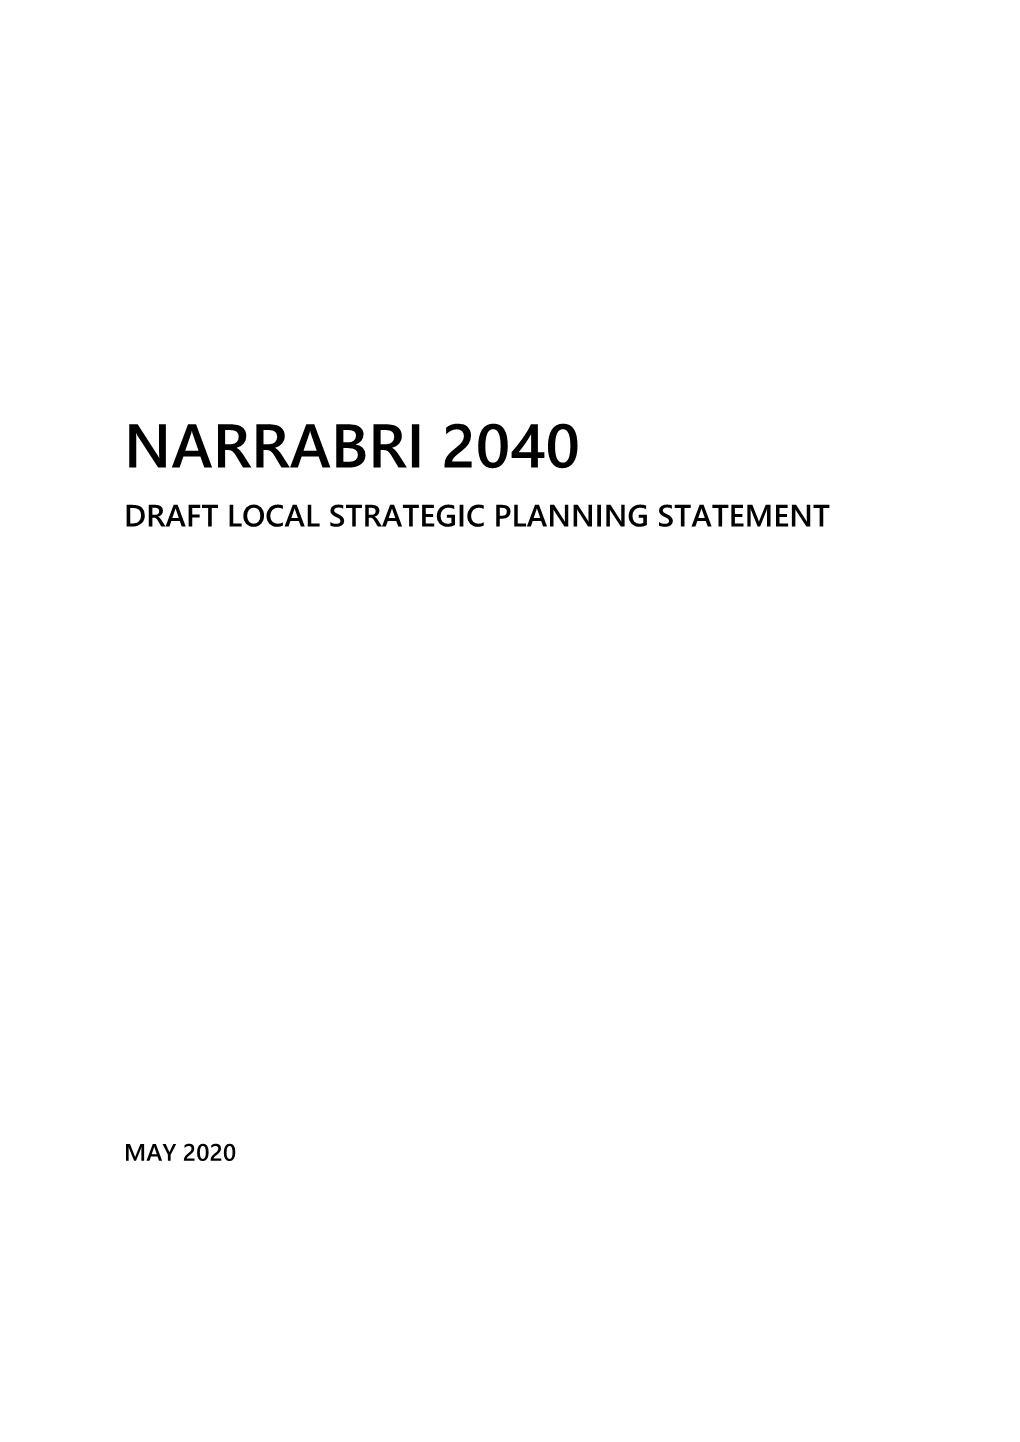 Narrabri 2040 Draft Local Strategic Planning Statement